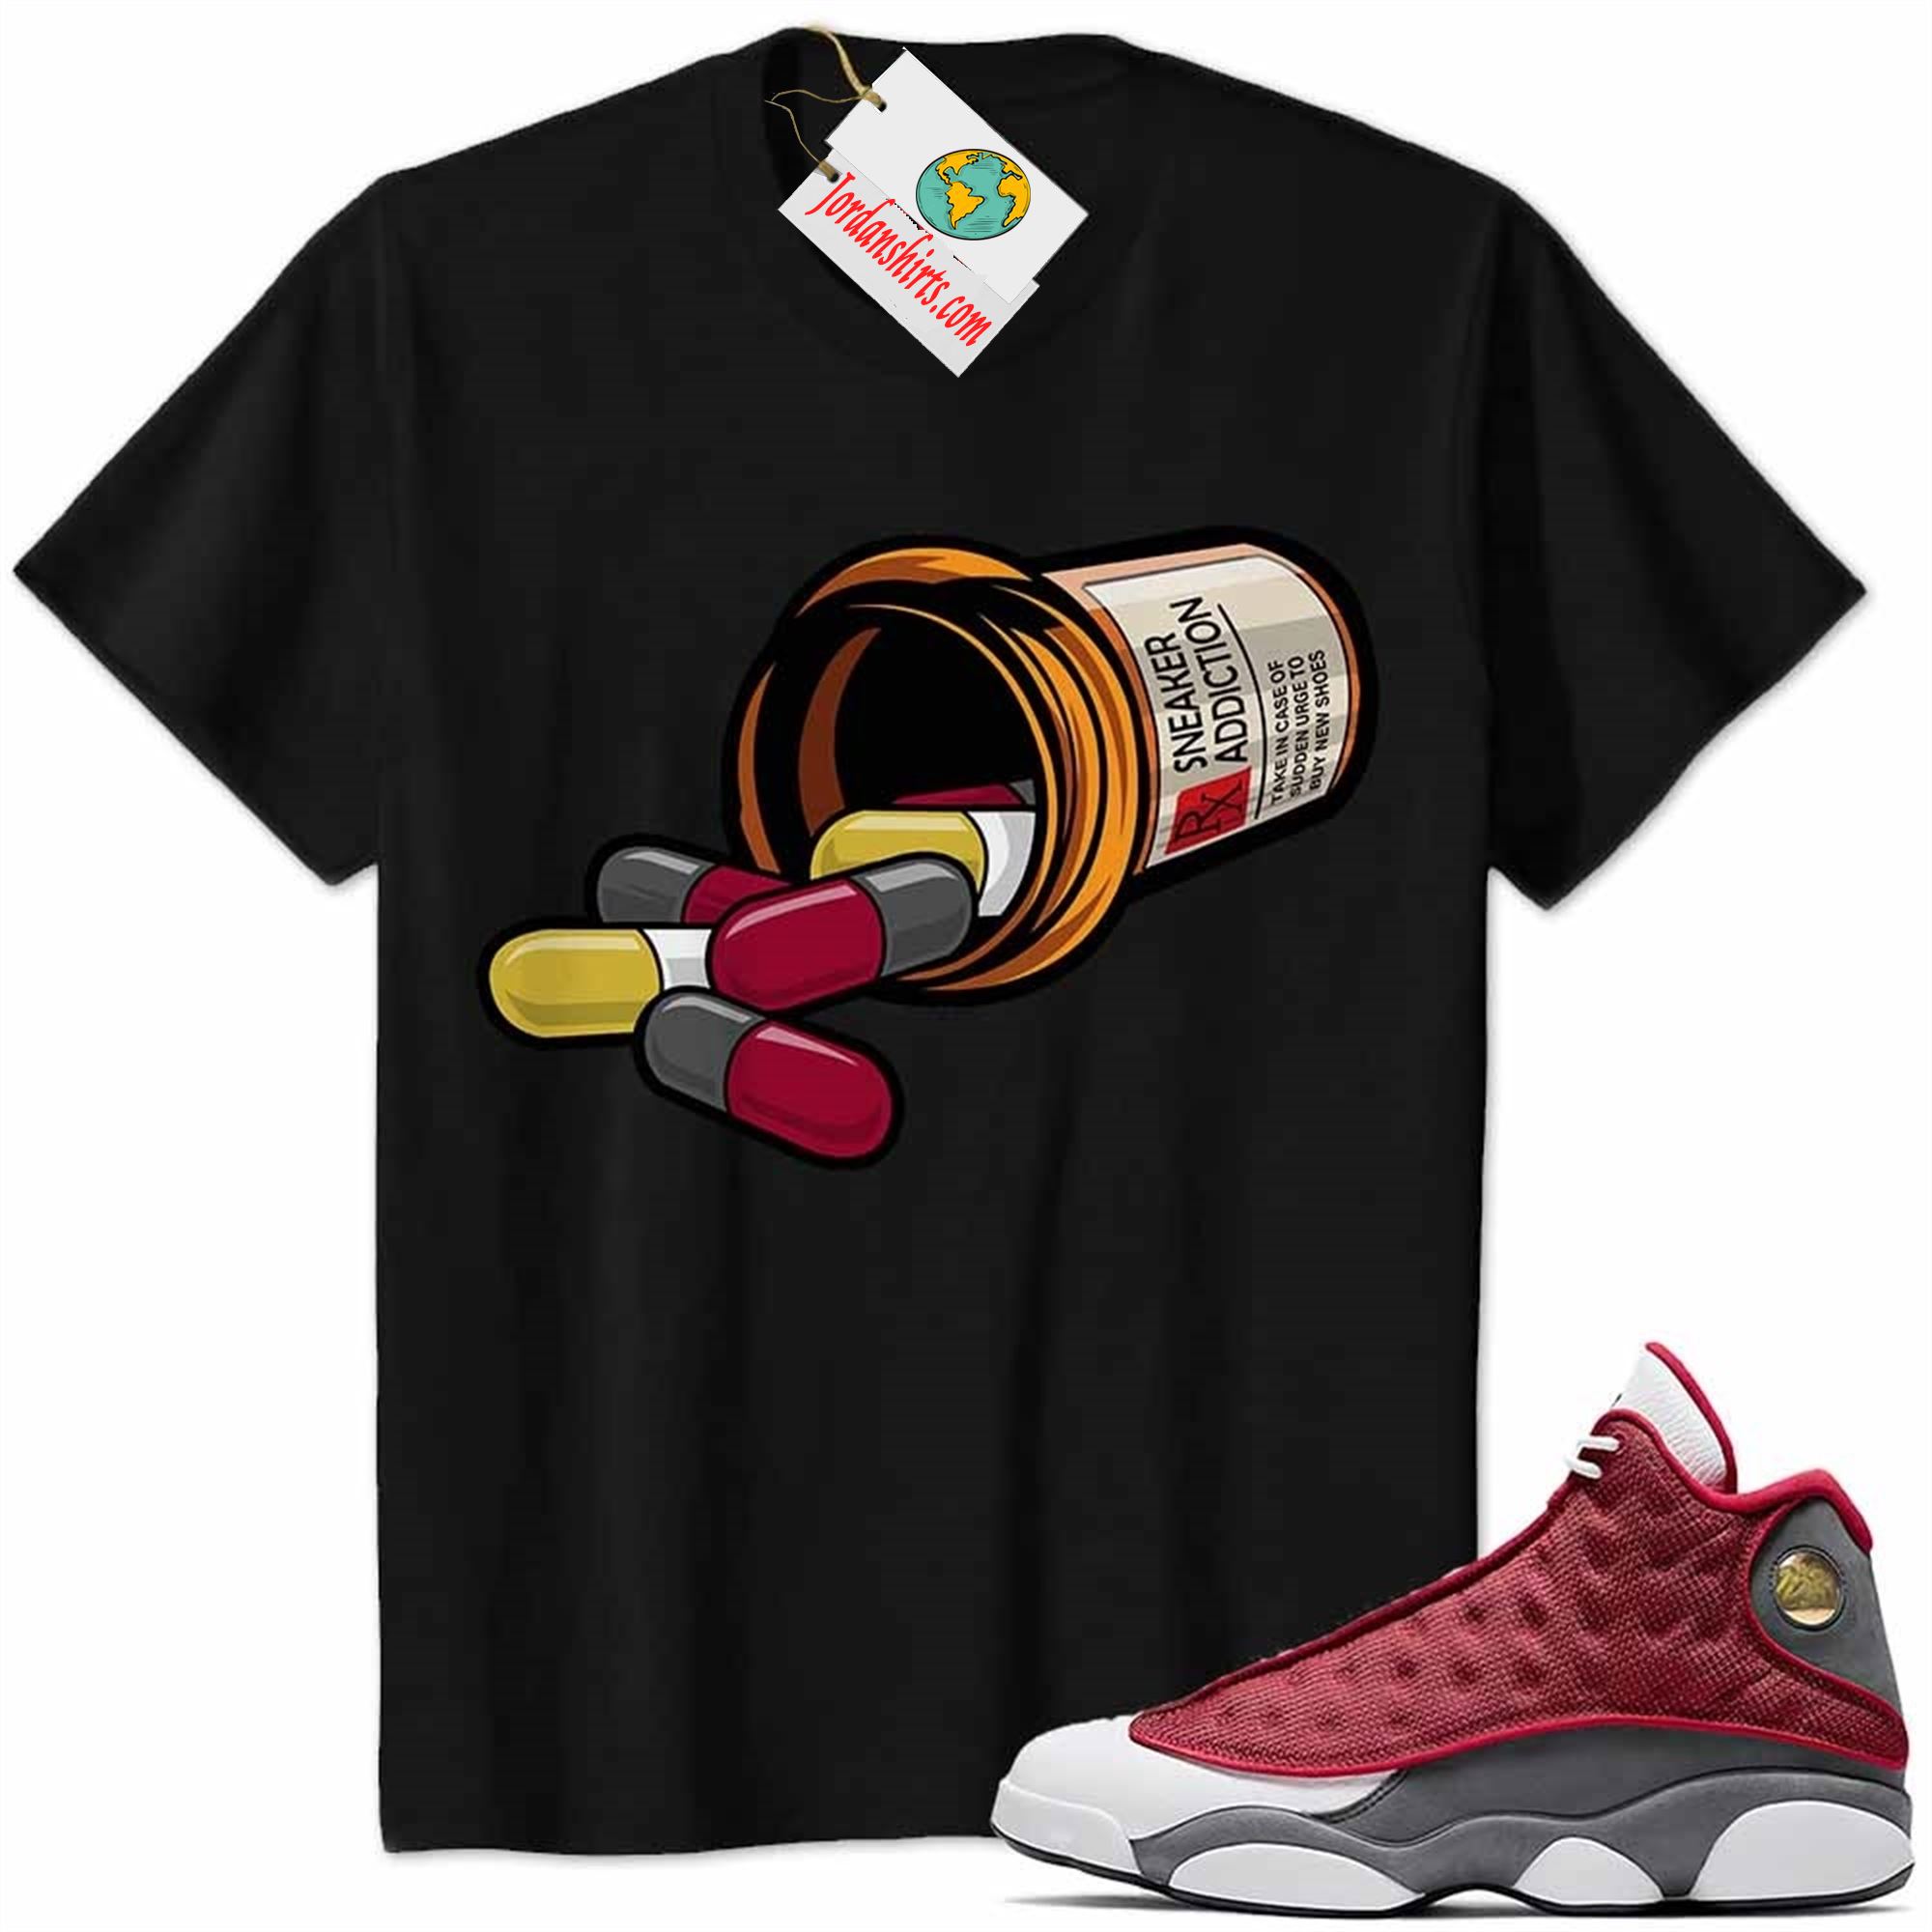 Jordan 13 Shirt, Rx Drugs Pill Bottle Sneaker Addiction Black Air Jordan 13 Red Flint 13s Full Size Up To 5xl